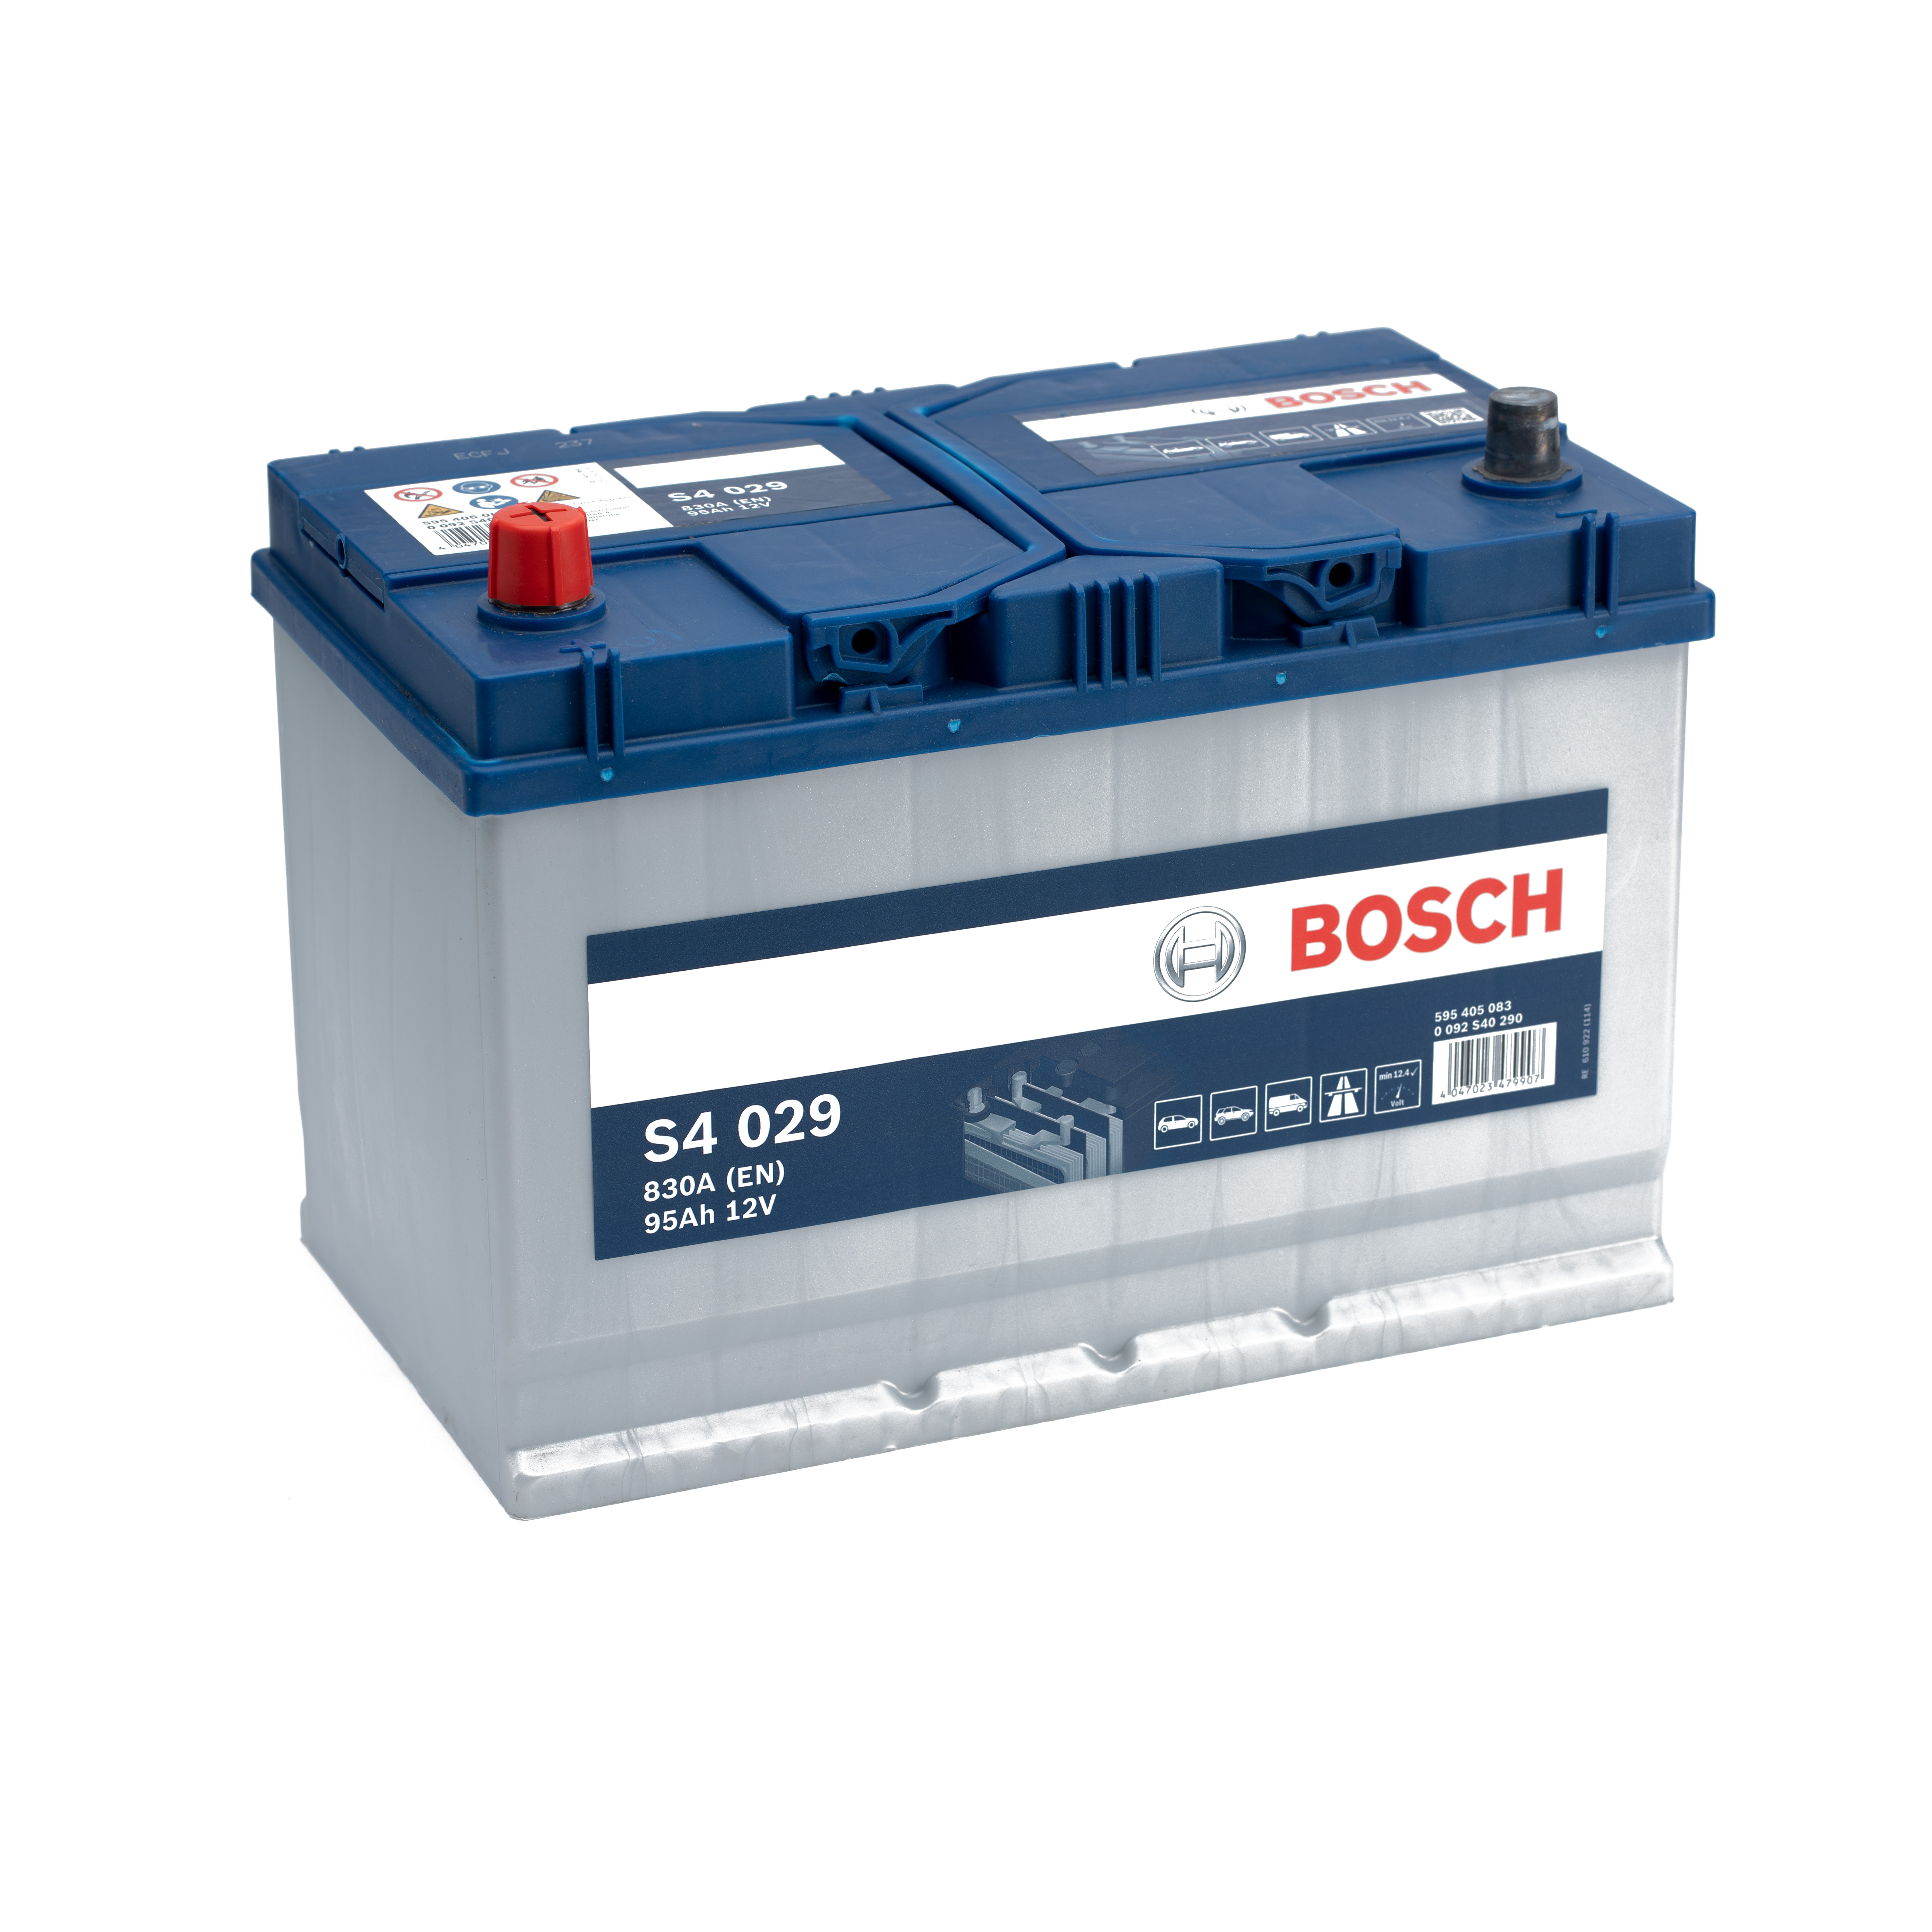 https://swissbatt24.ch/media/image/0b/3d/dc/Bosch-S4-029-95Ah-Autobatterie-595405083.jpg